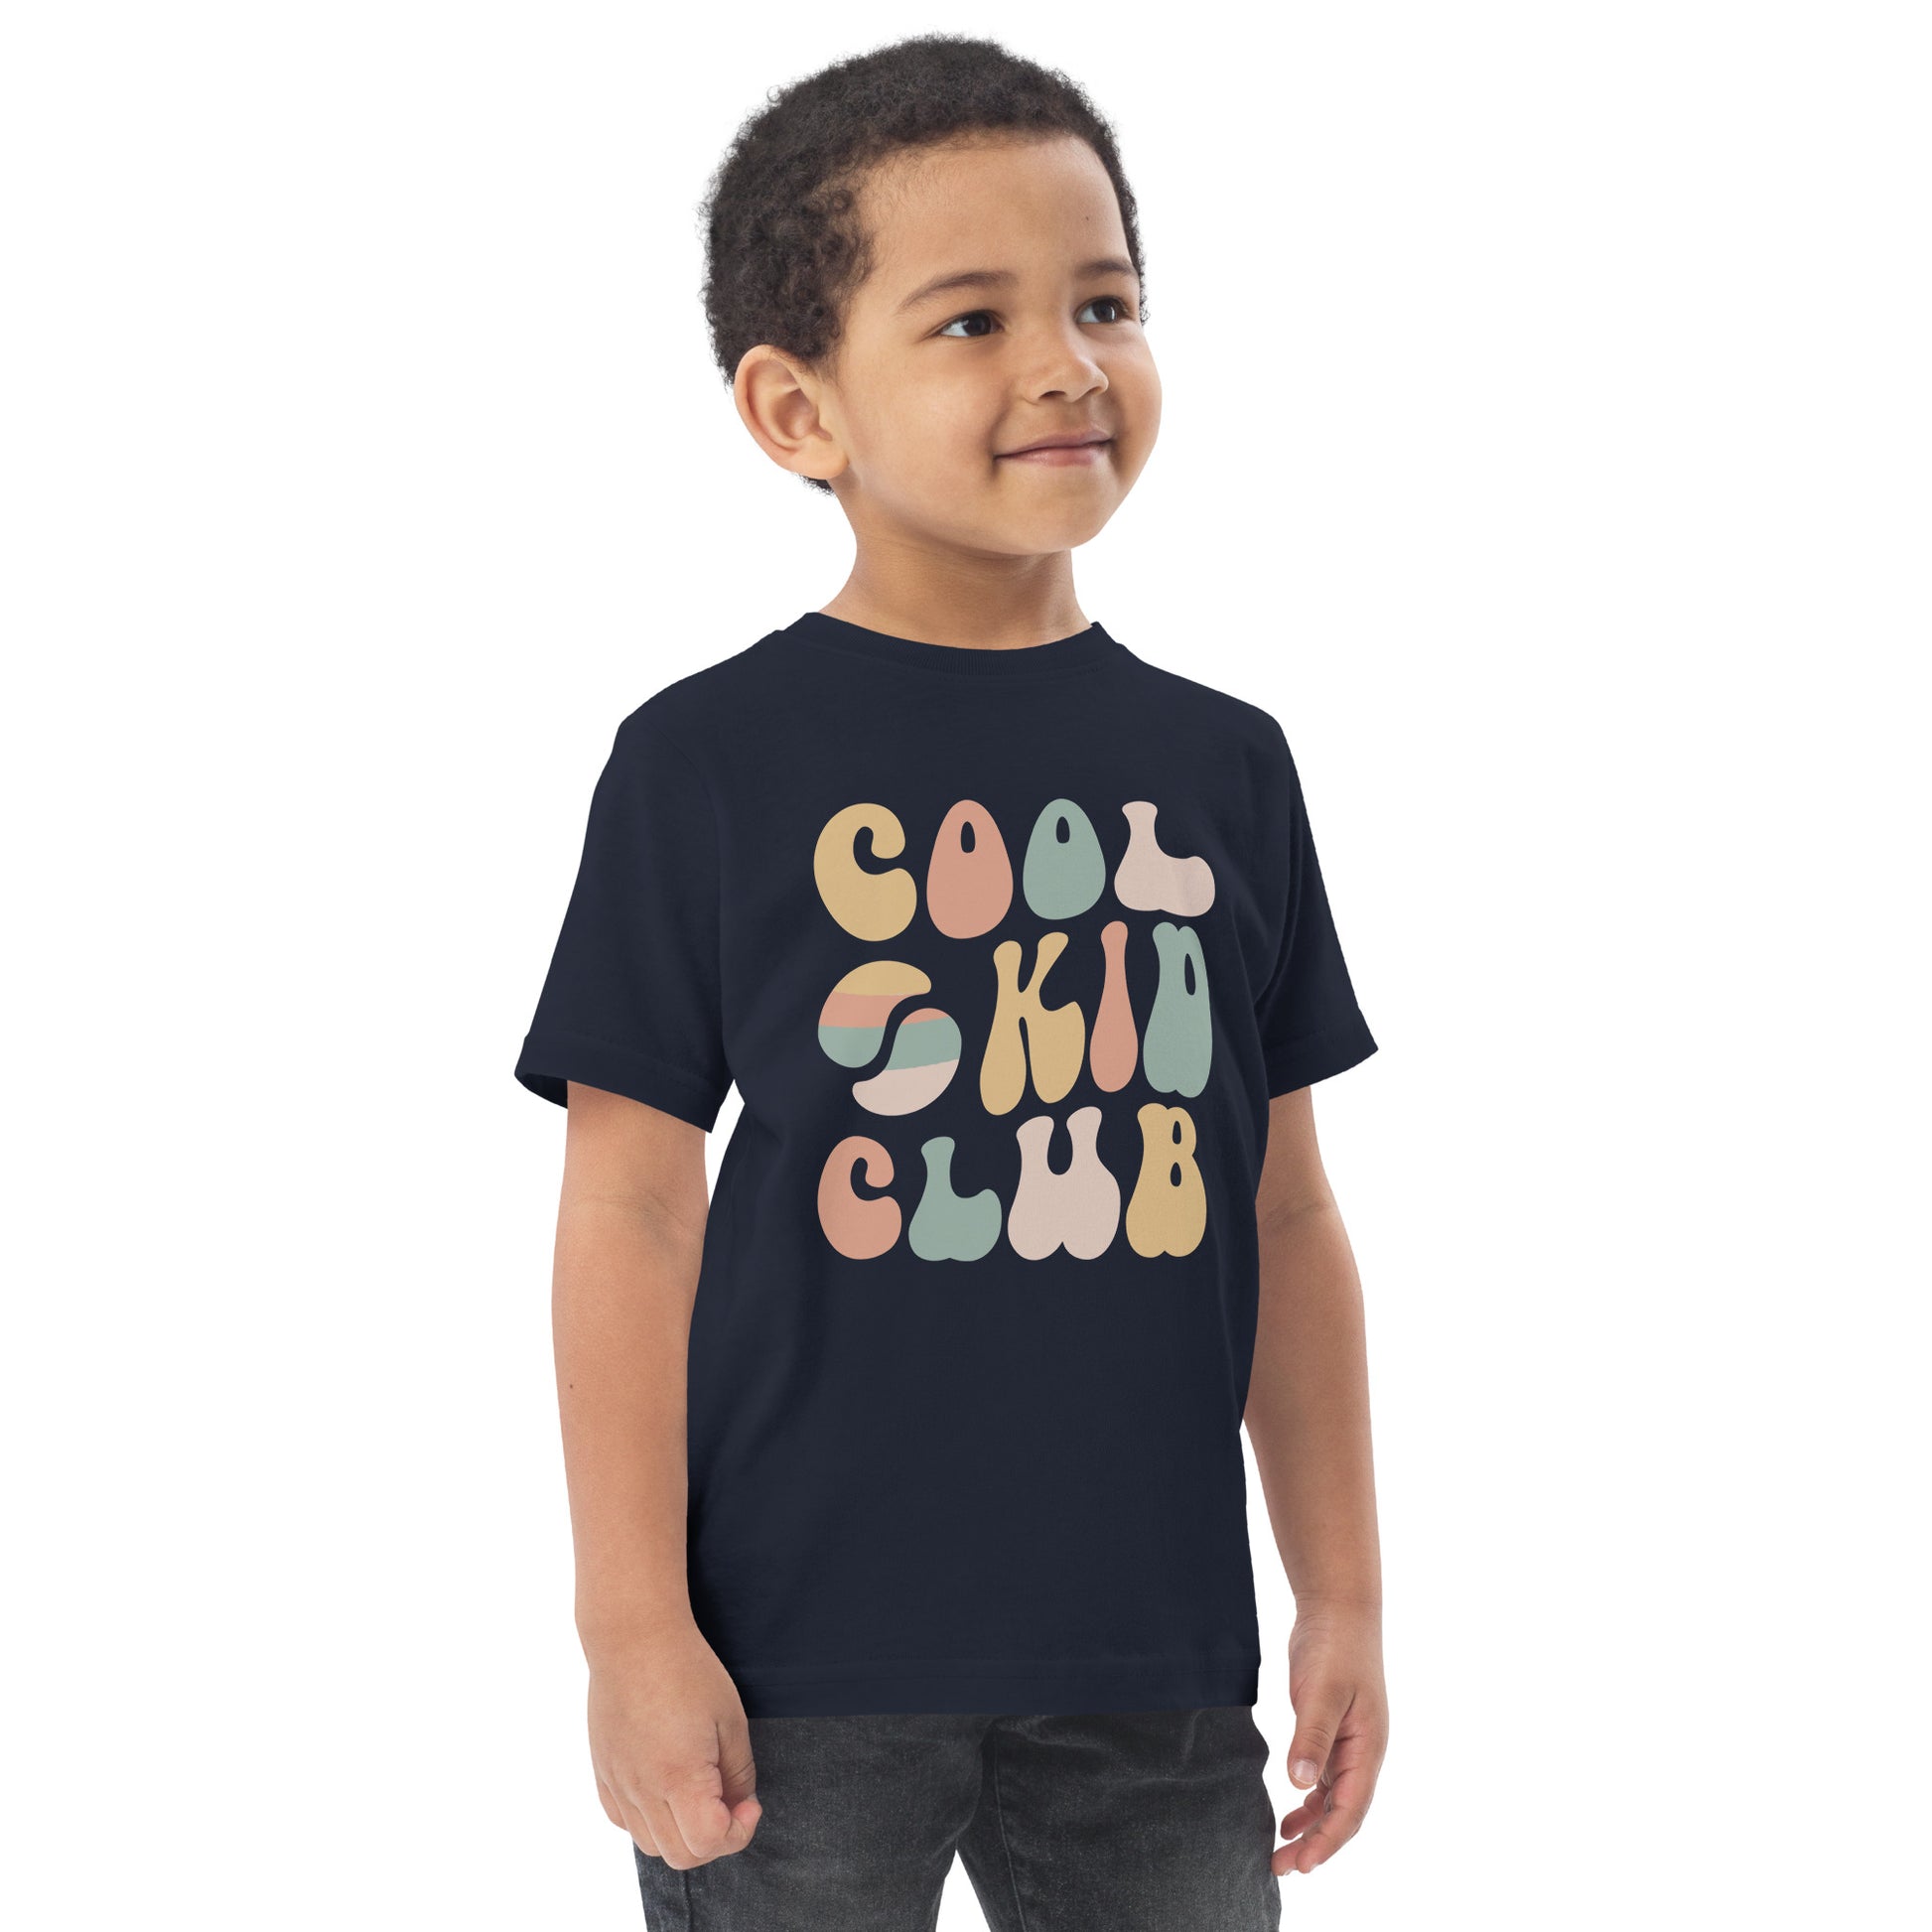 Cool Kid Club Tee (Toddler) Navy